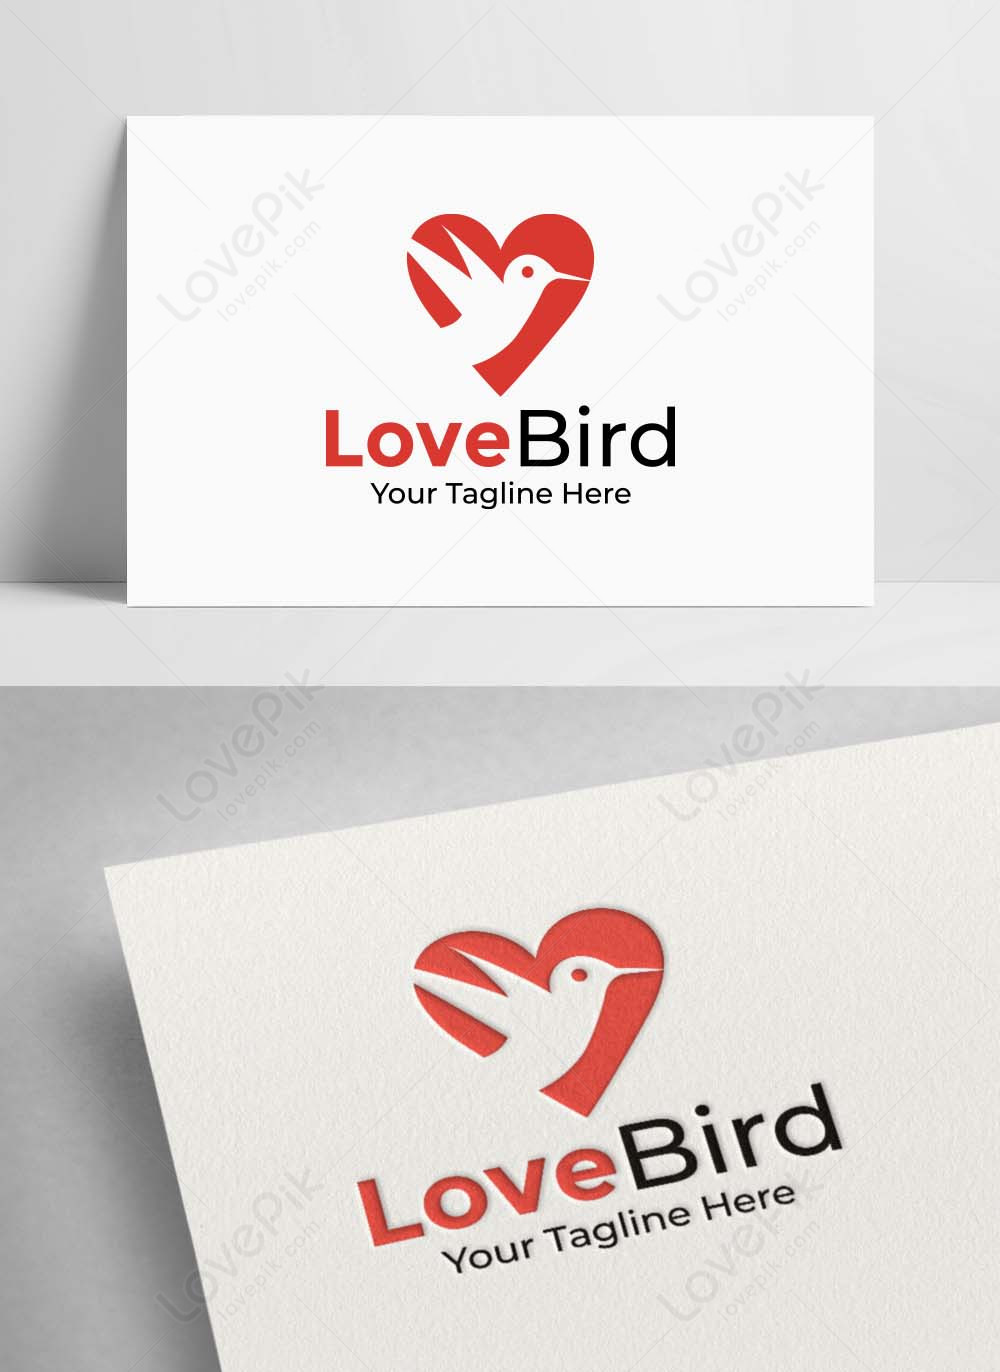 beauty lovebird logo - SuperStock